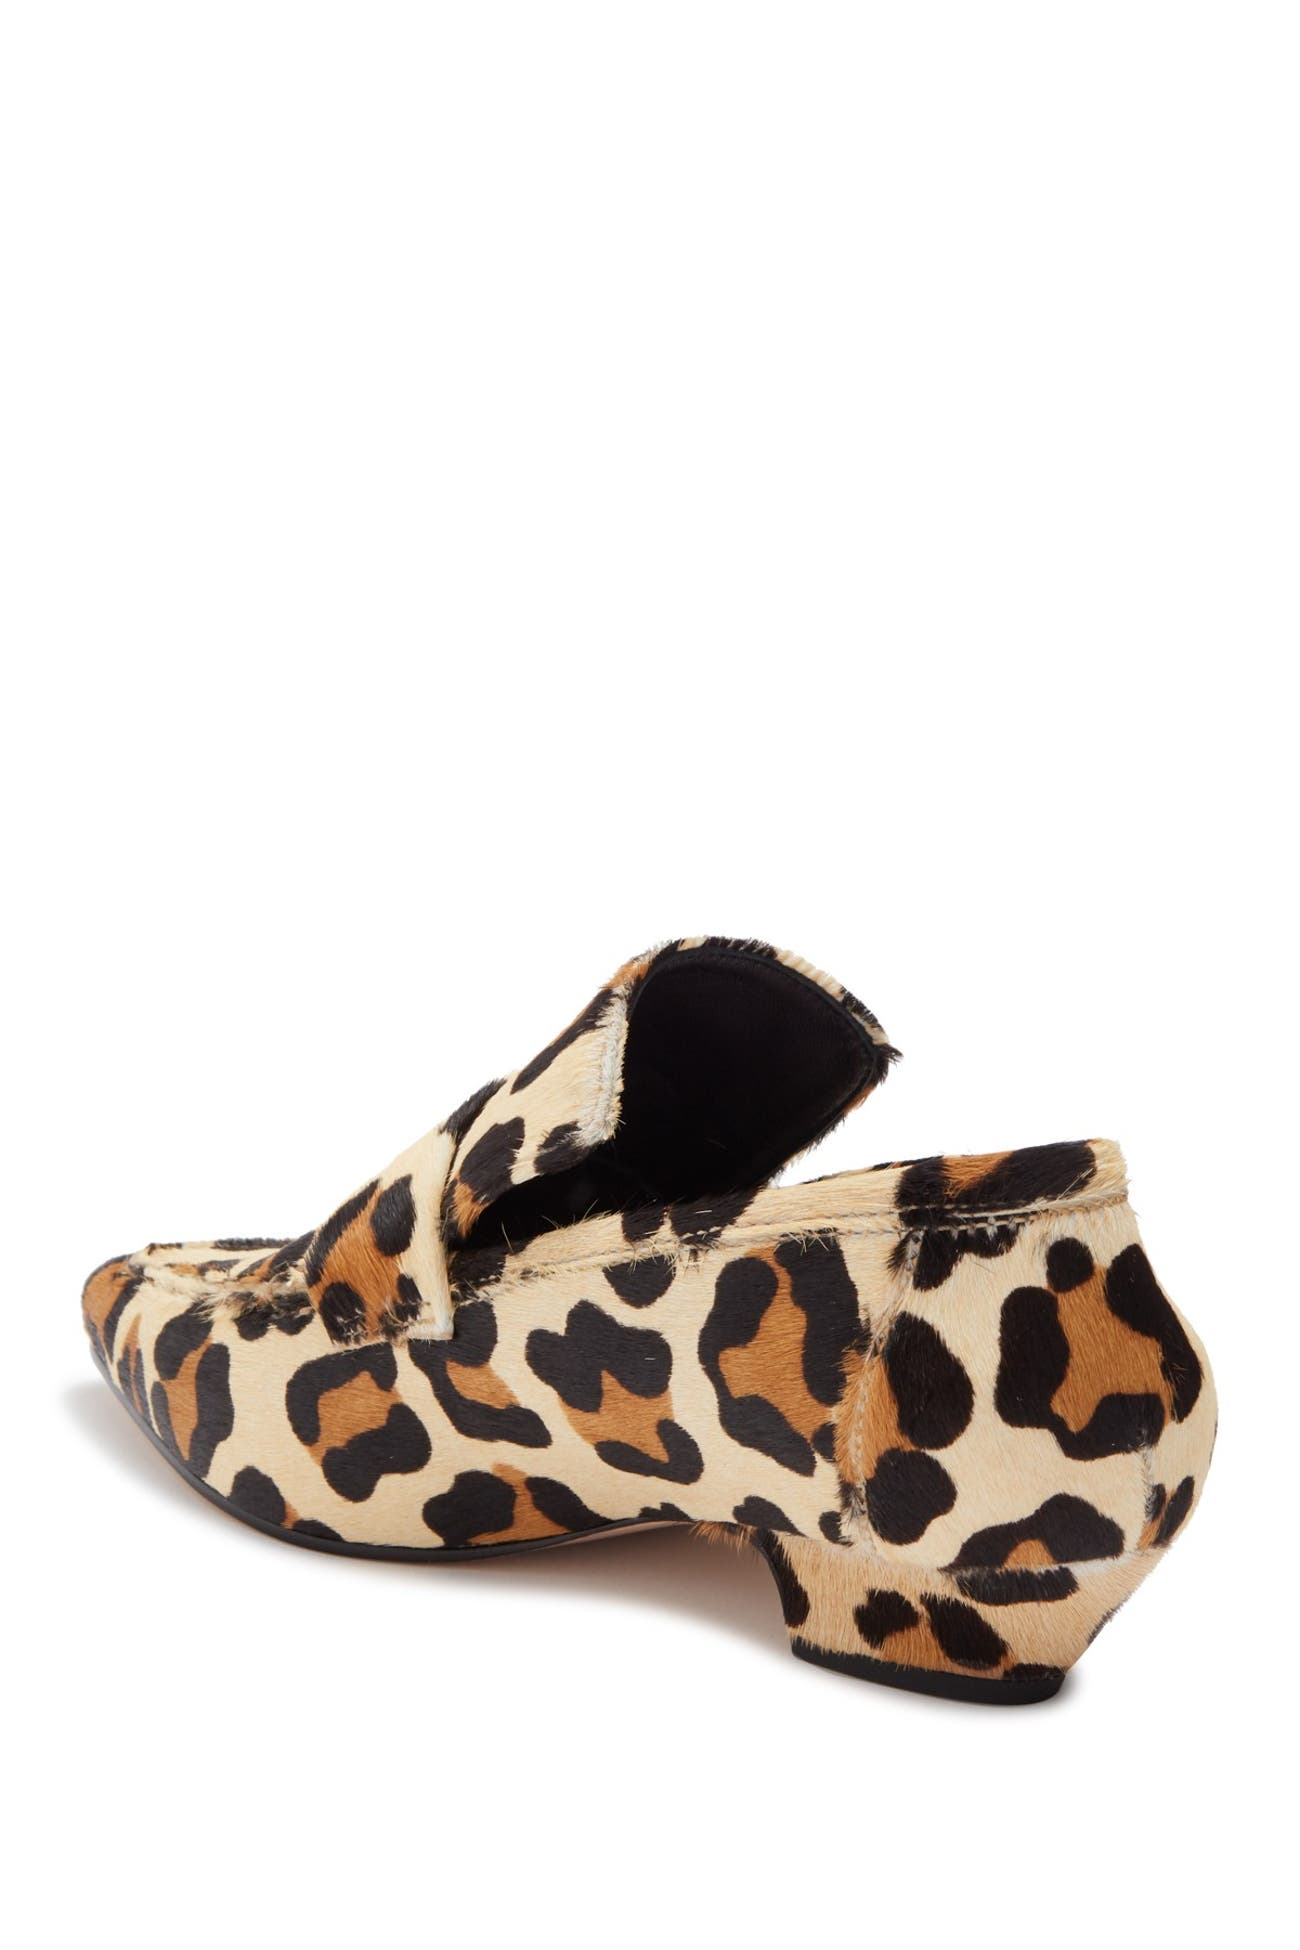 Schutz | Emelie Leopard Print Genuine Calf Hair Loafer | Nordstrom Rack